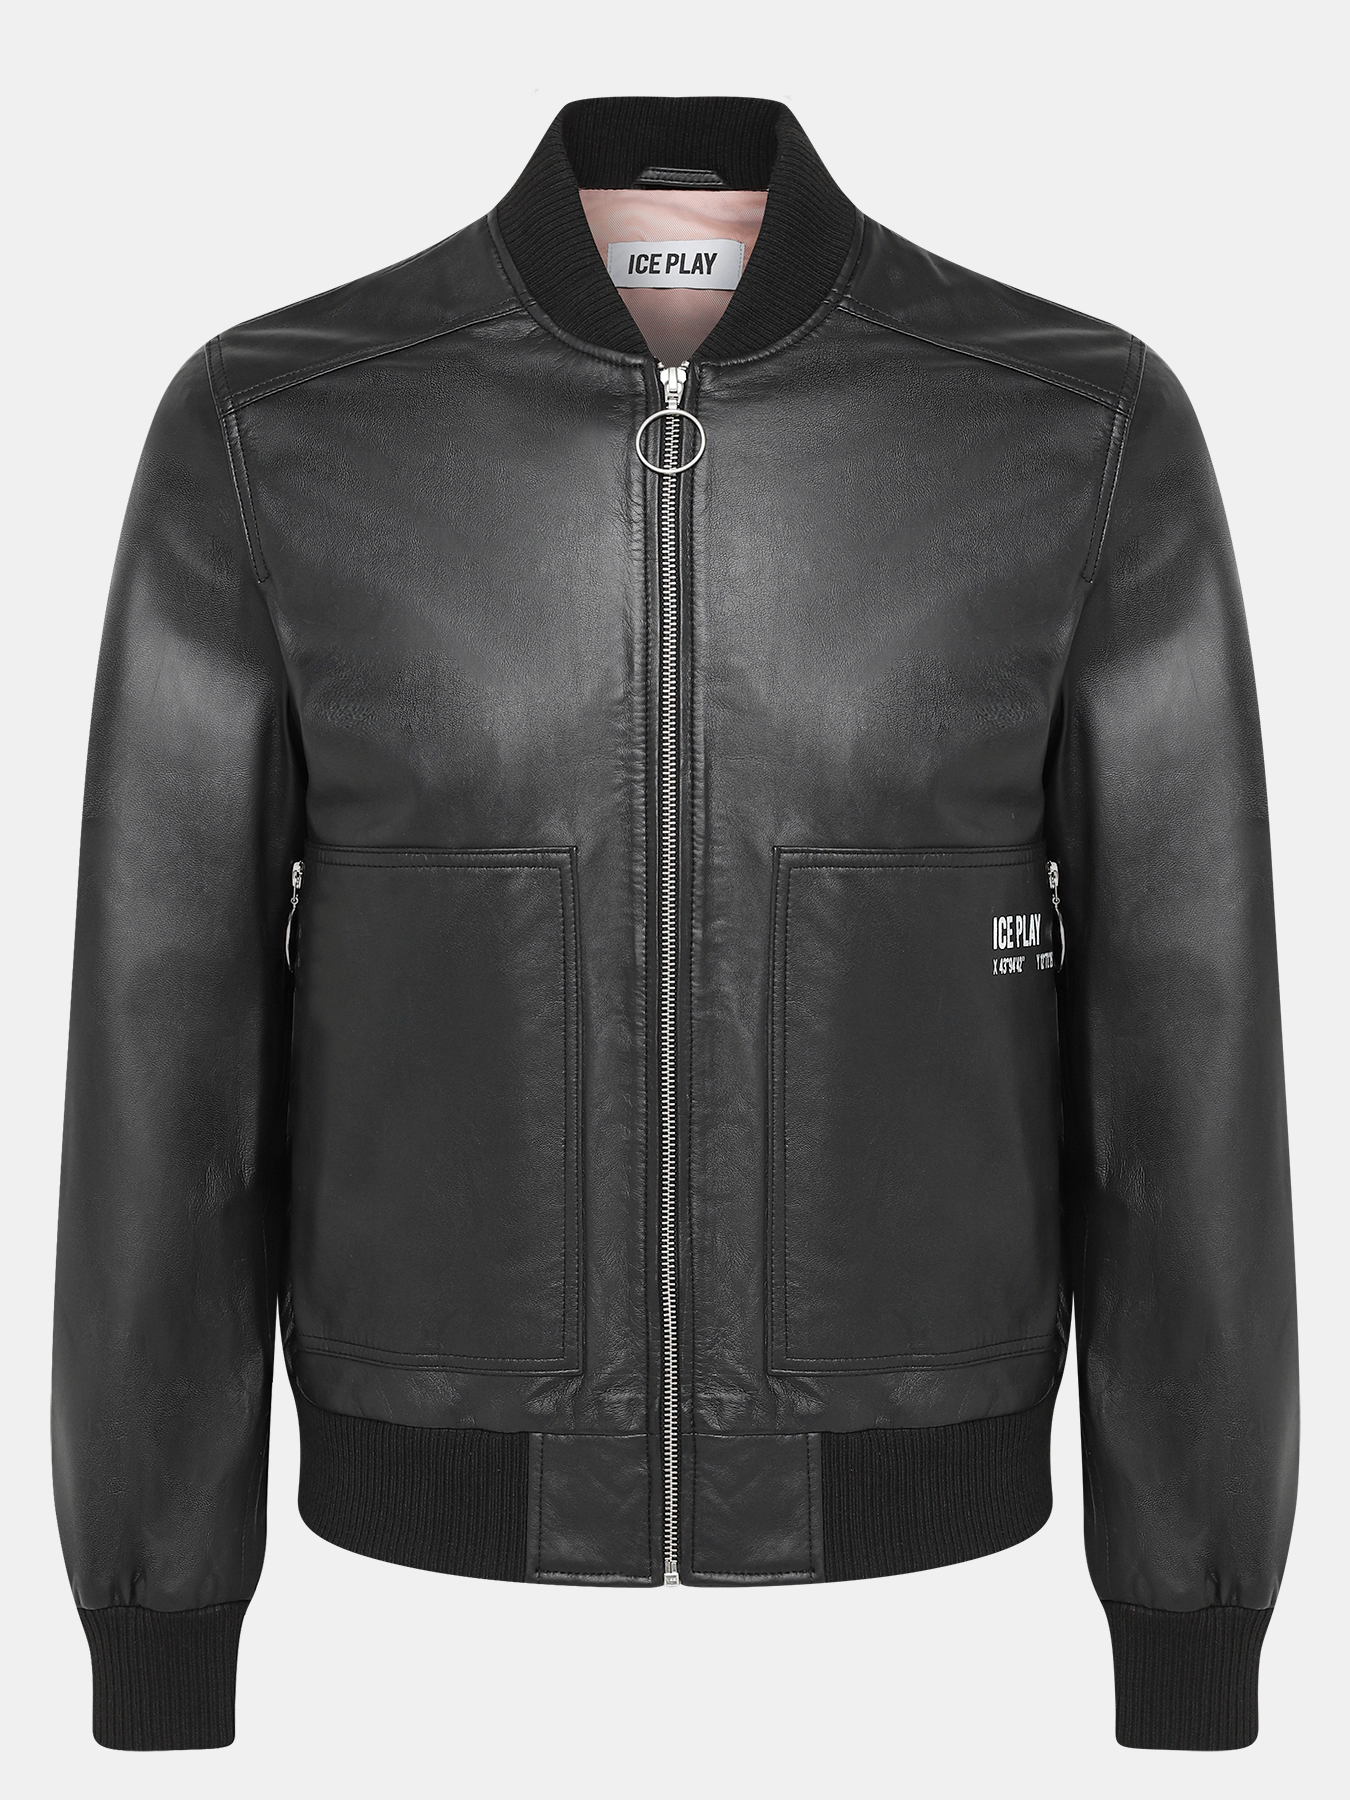 Кожаная куртка Ice Play 407198-025, цвет черный, размер 48